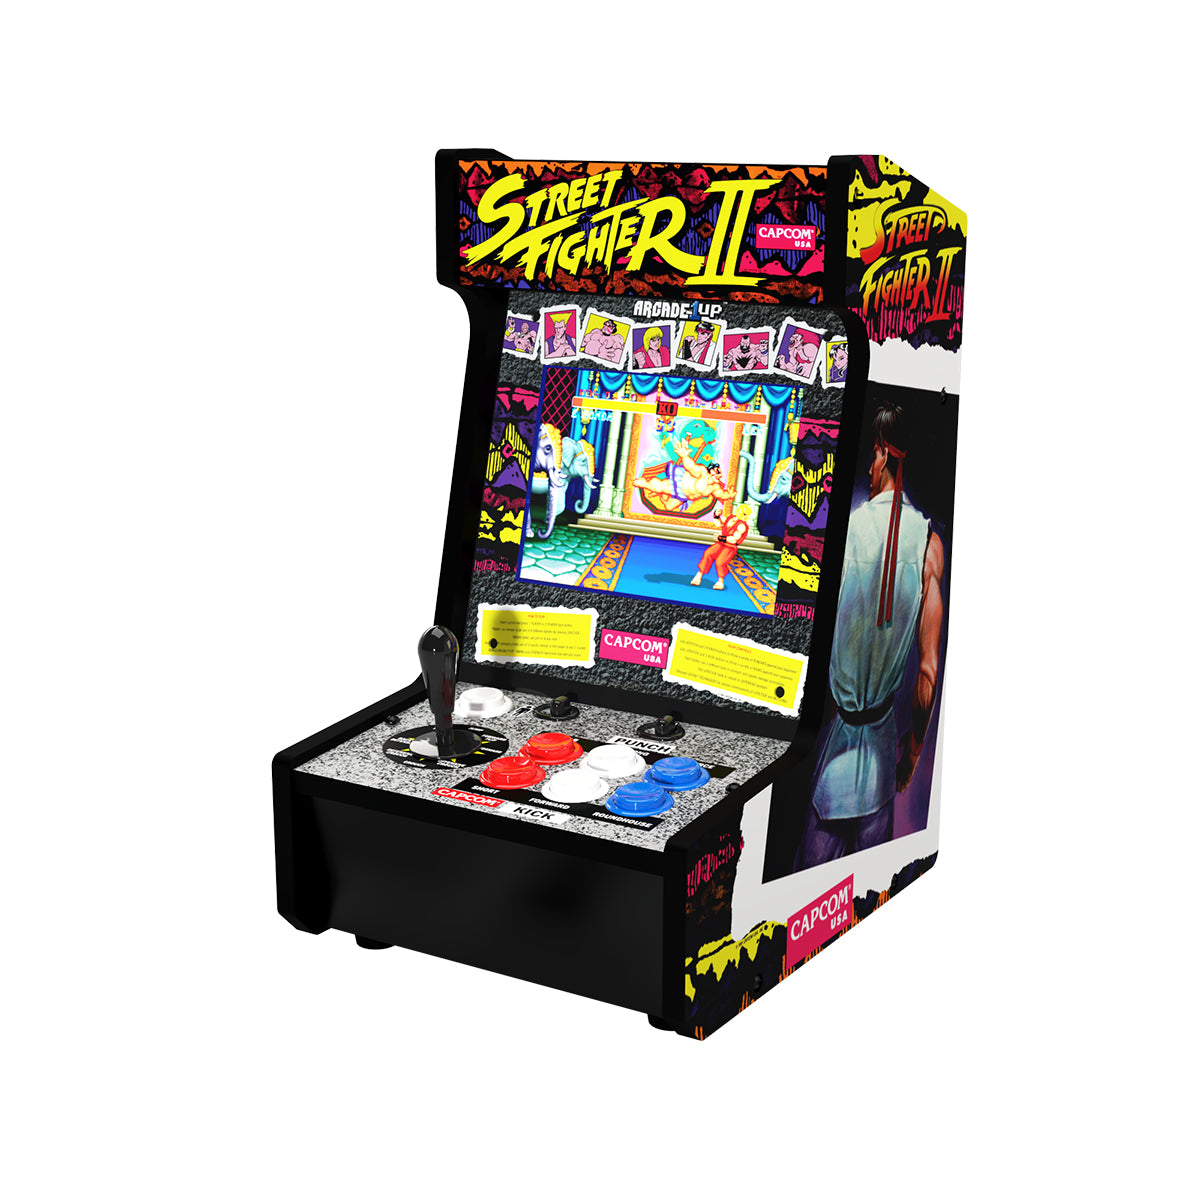 Arcade1Up Street Fighter COUNTERCADE